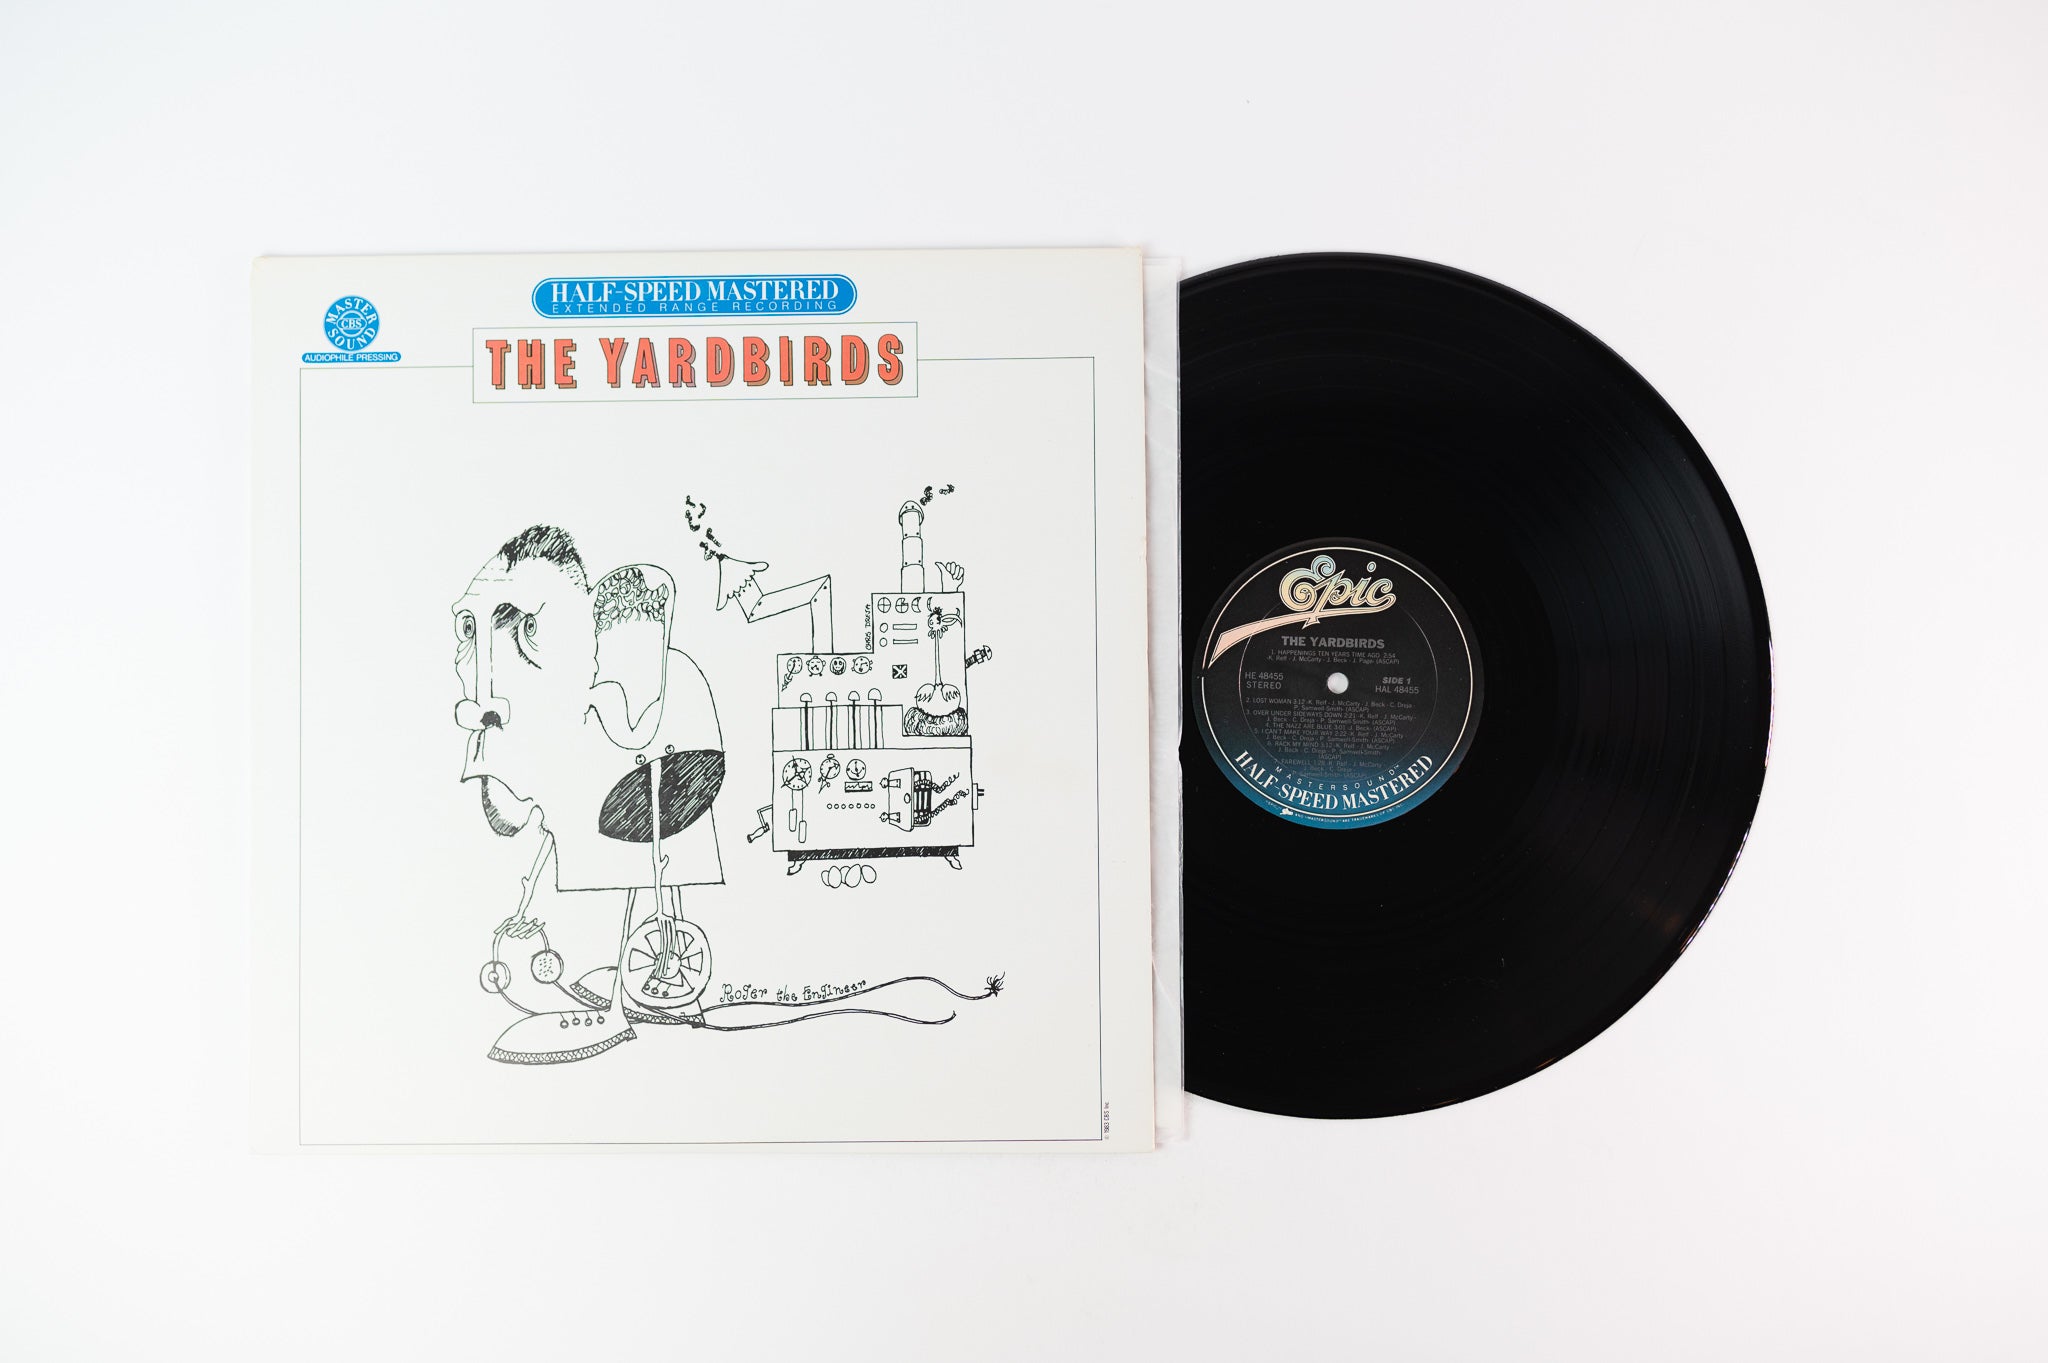 The Yardbirds - The Yardbirds on Epic Half Speed Mastered